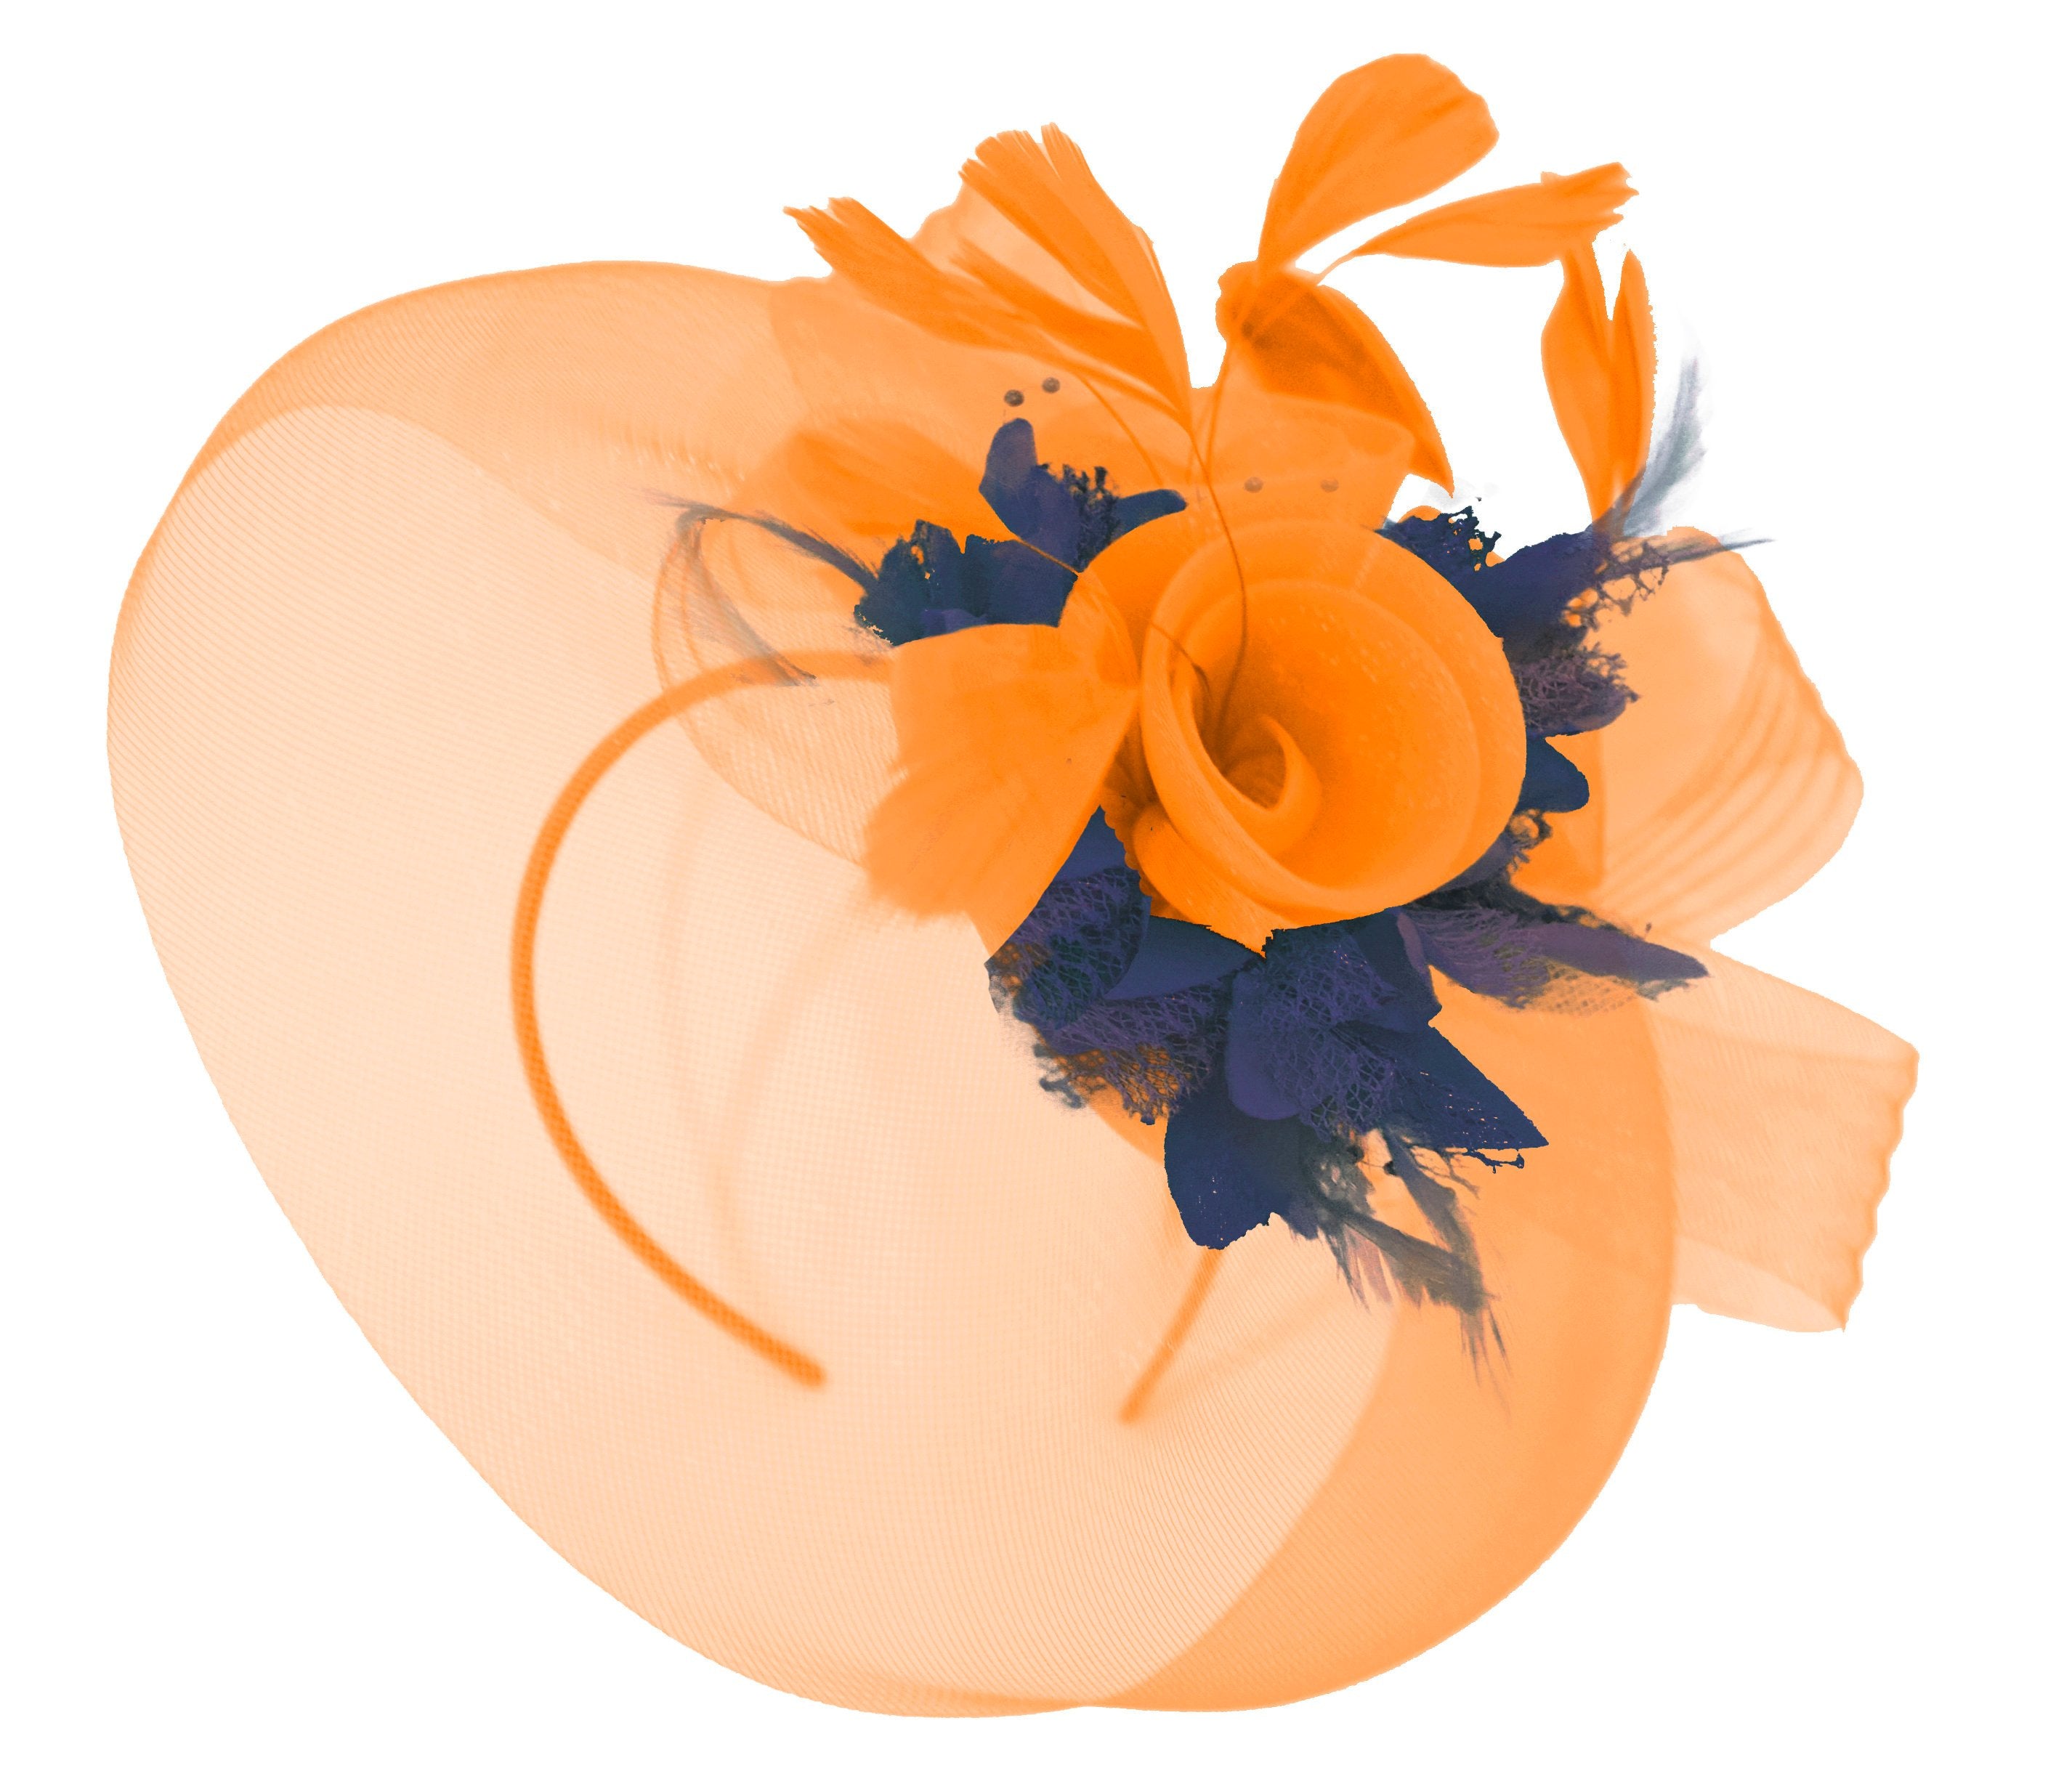 Caprilite Orange and Navy Fascinator Hat Veil Net Hair Clip Ascot Derby Races Wedding Headband Feather Flower